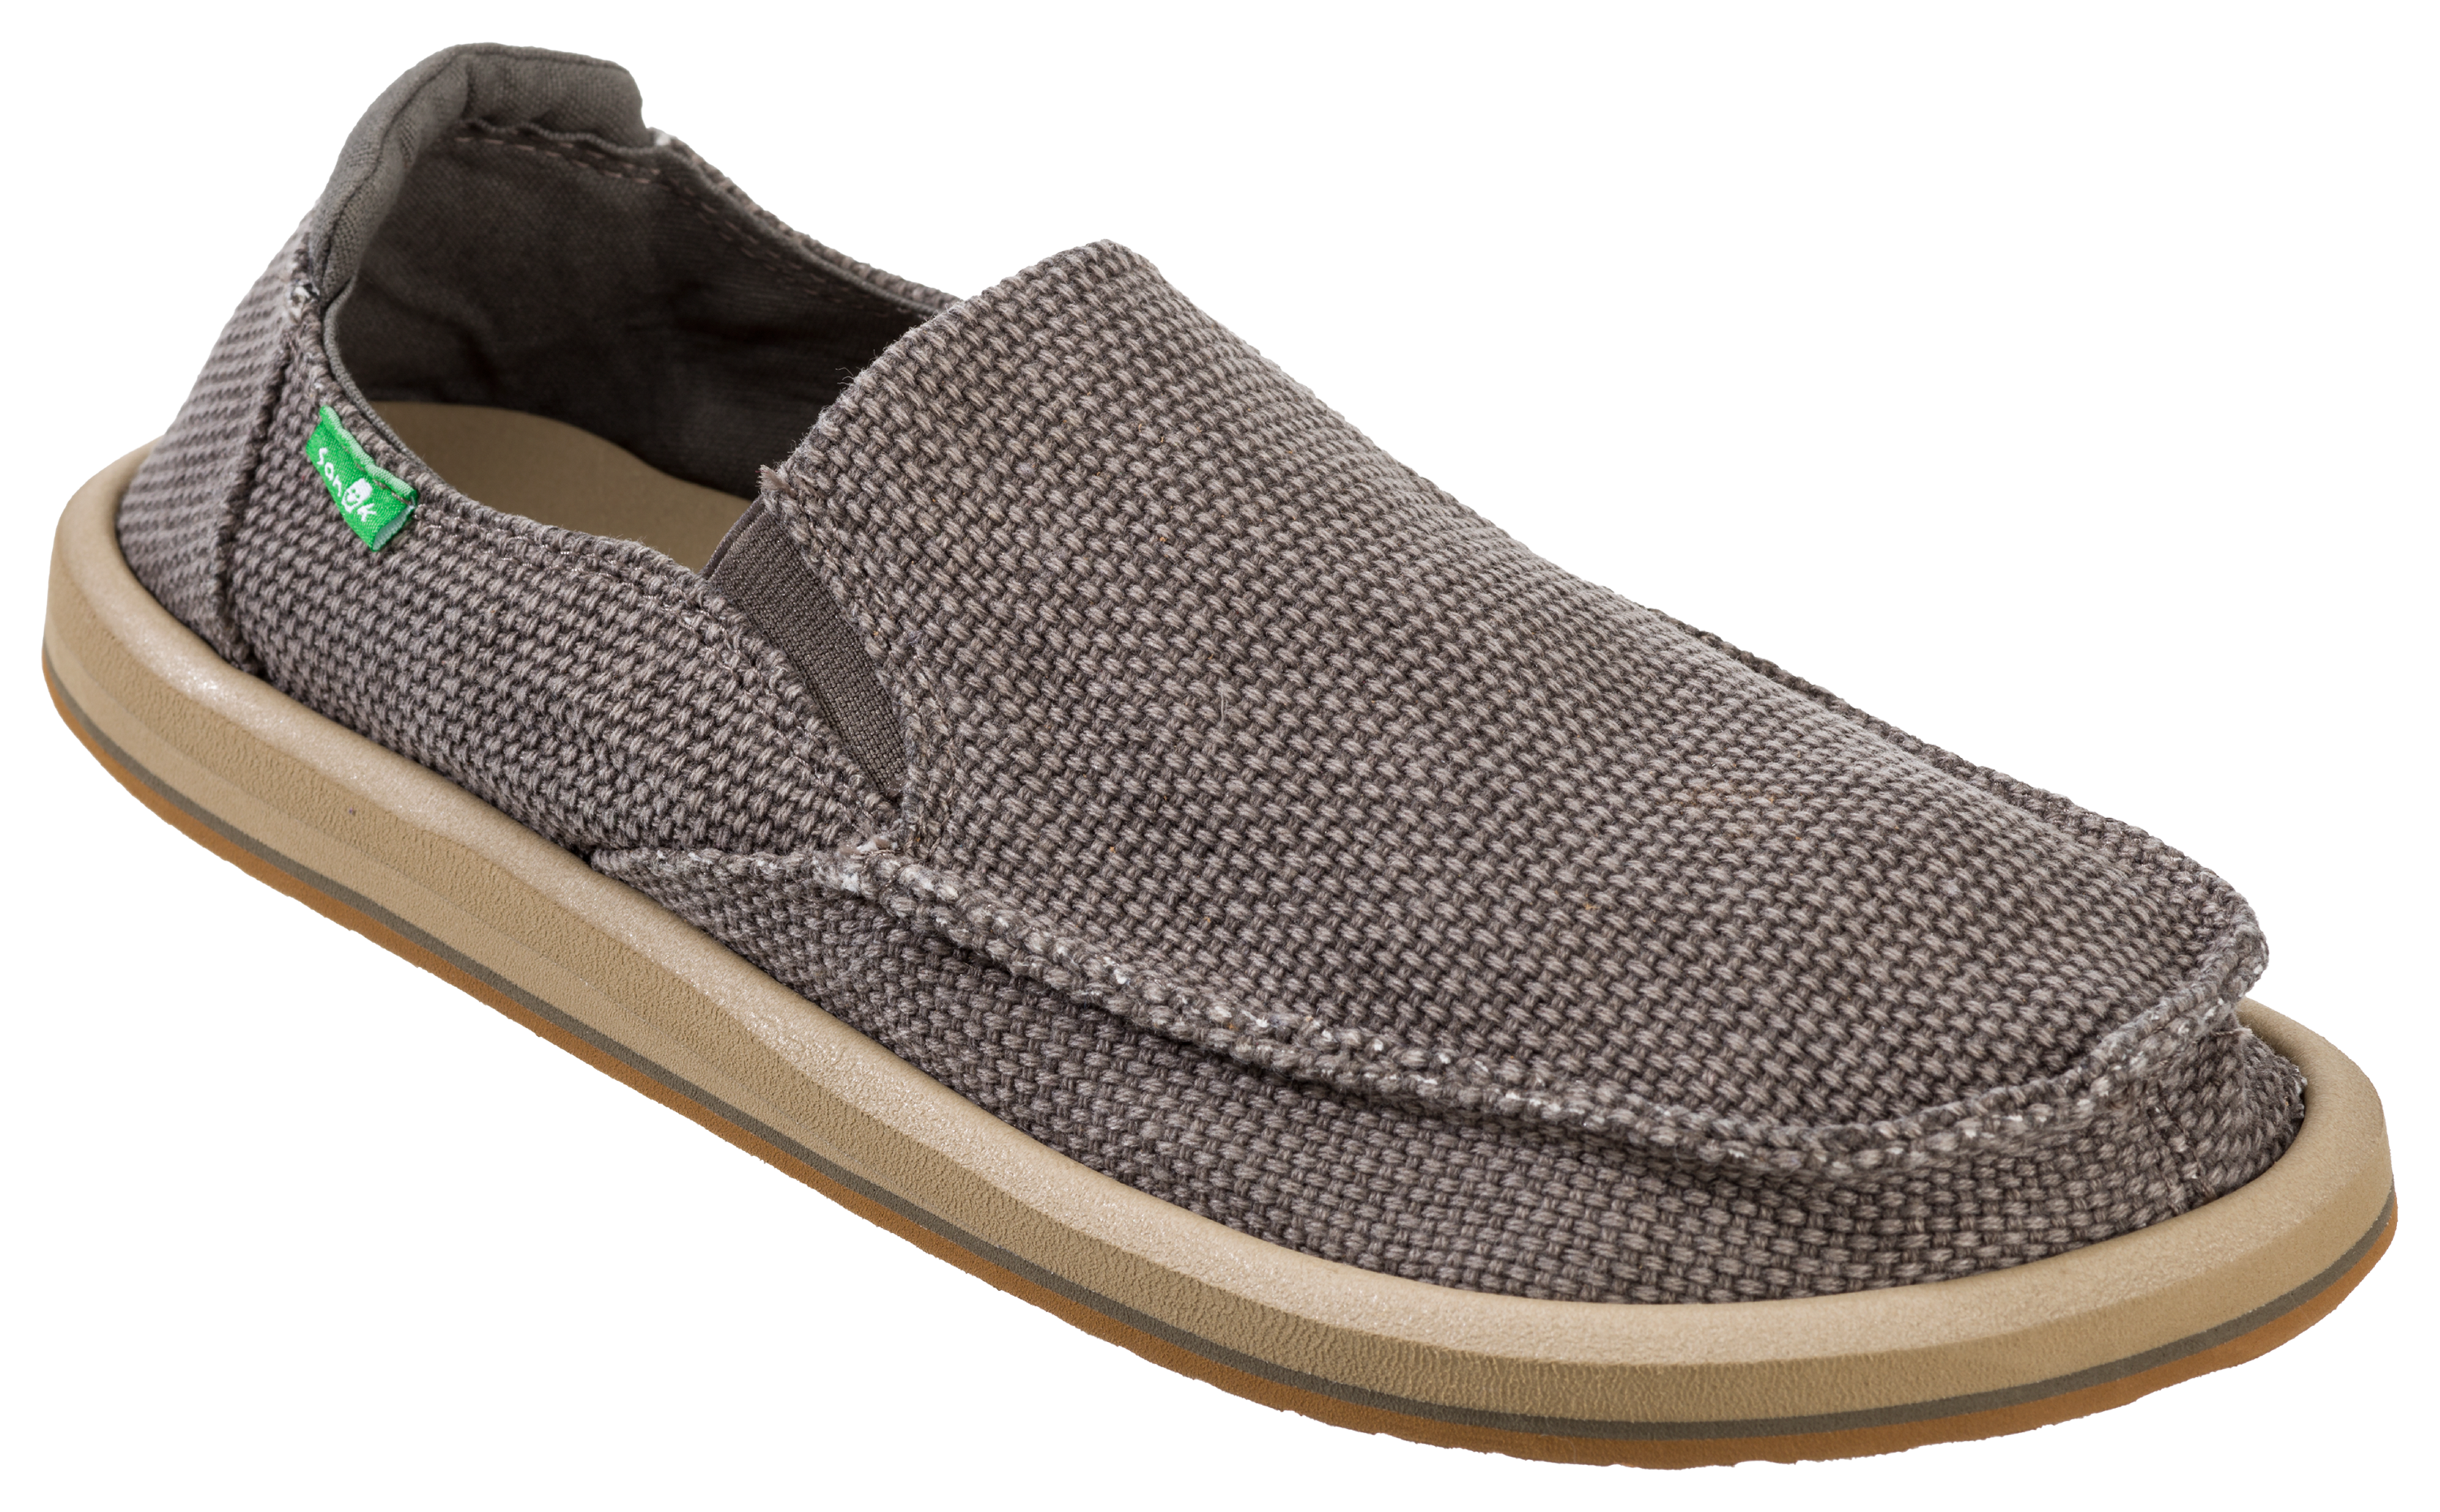 New* Sanuk Vagabonded Vulc Sidewalk Surfer Slip On Charcoal Shoes Men's  Size 8